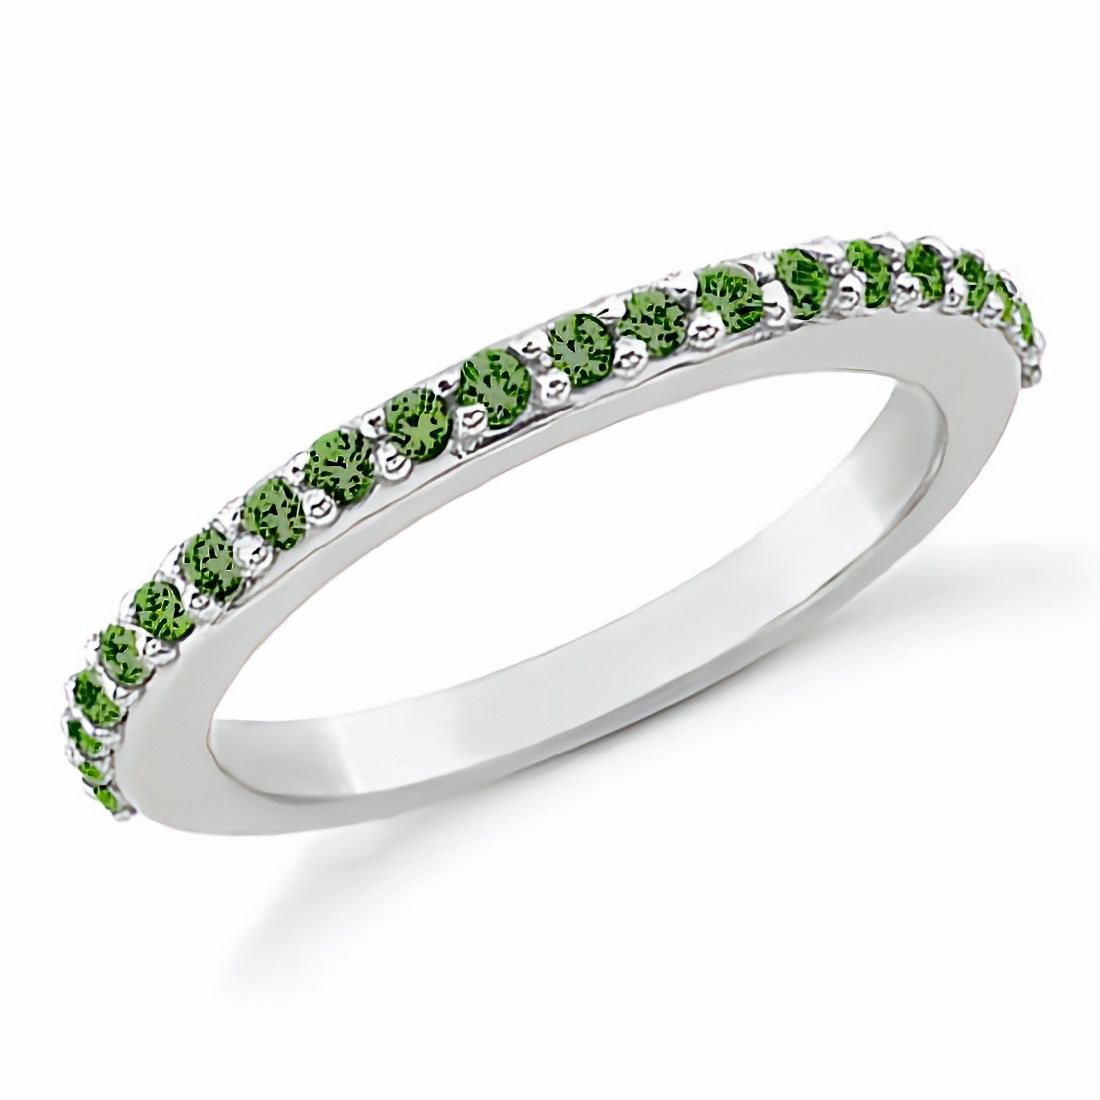 Fancy-Green Diamond Wedding Band Enhancer Ring